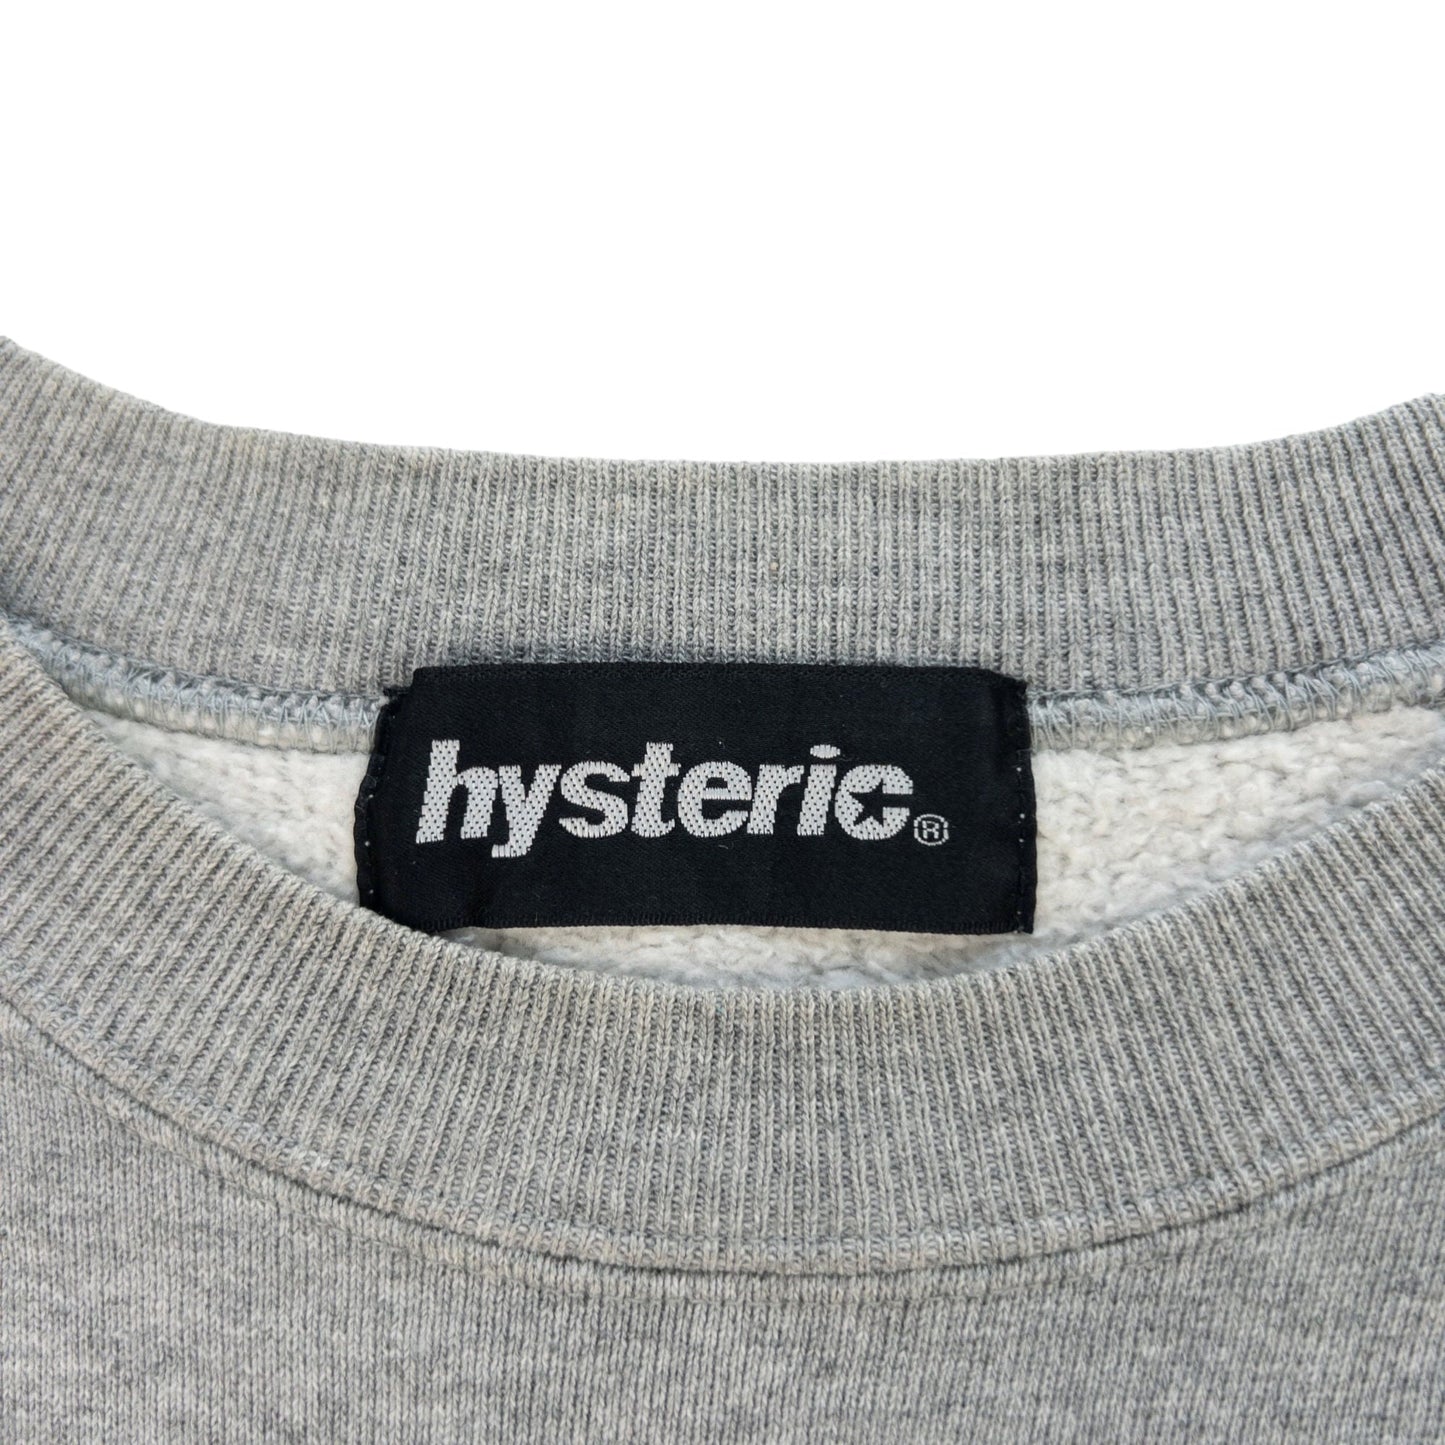 Vintage Hysteric Glamour Sweatshirt Size M